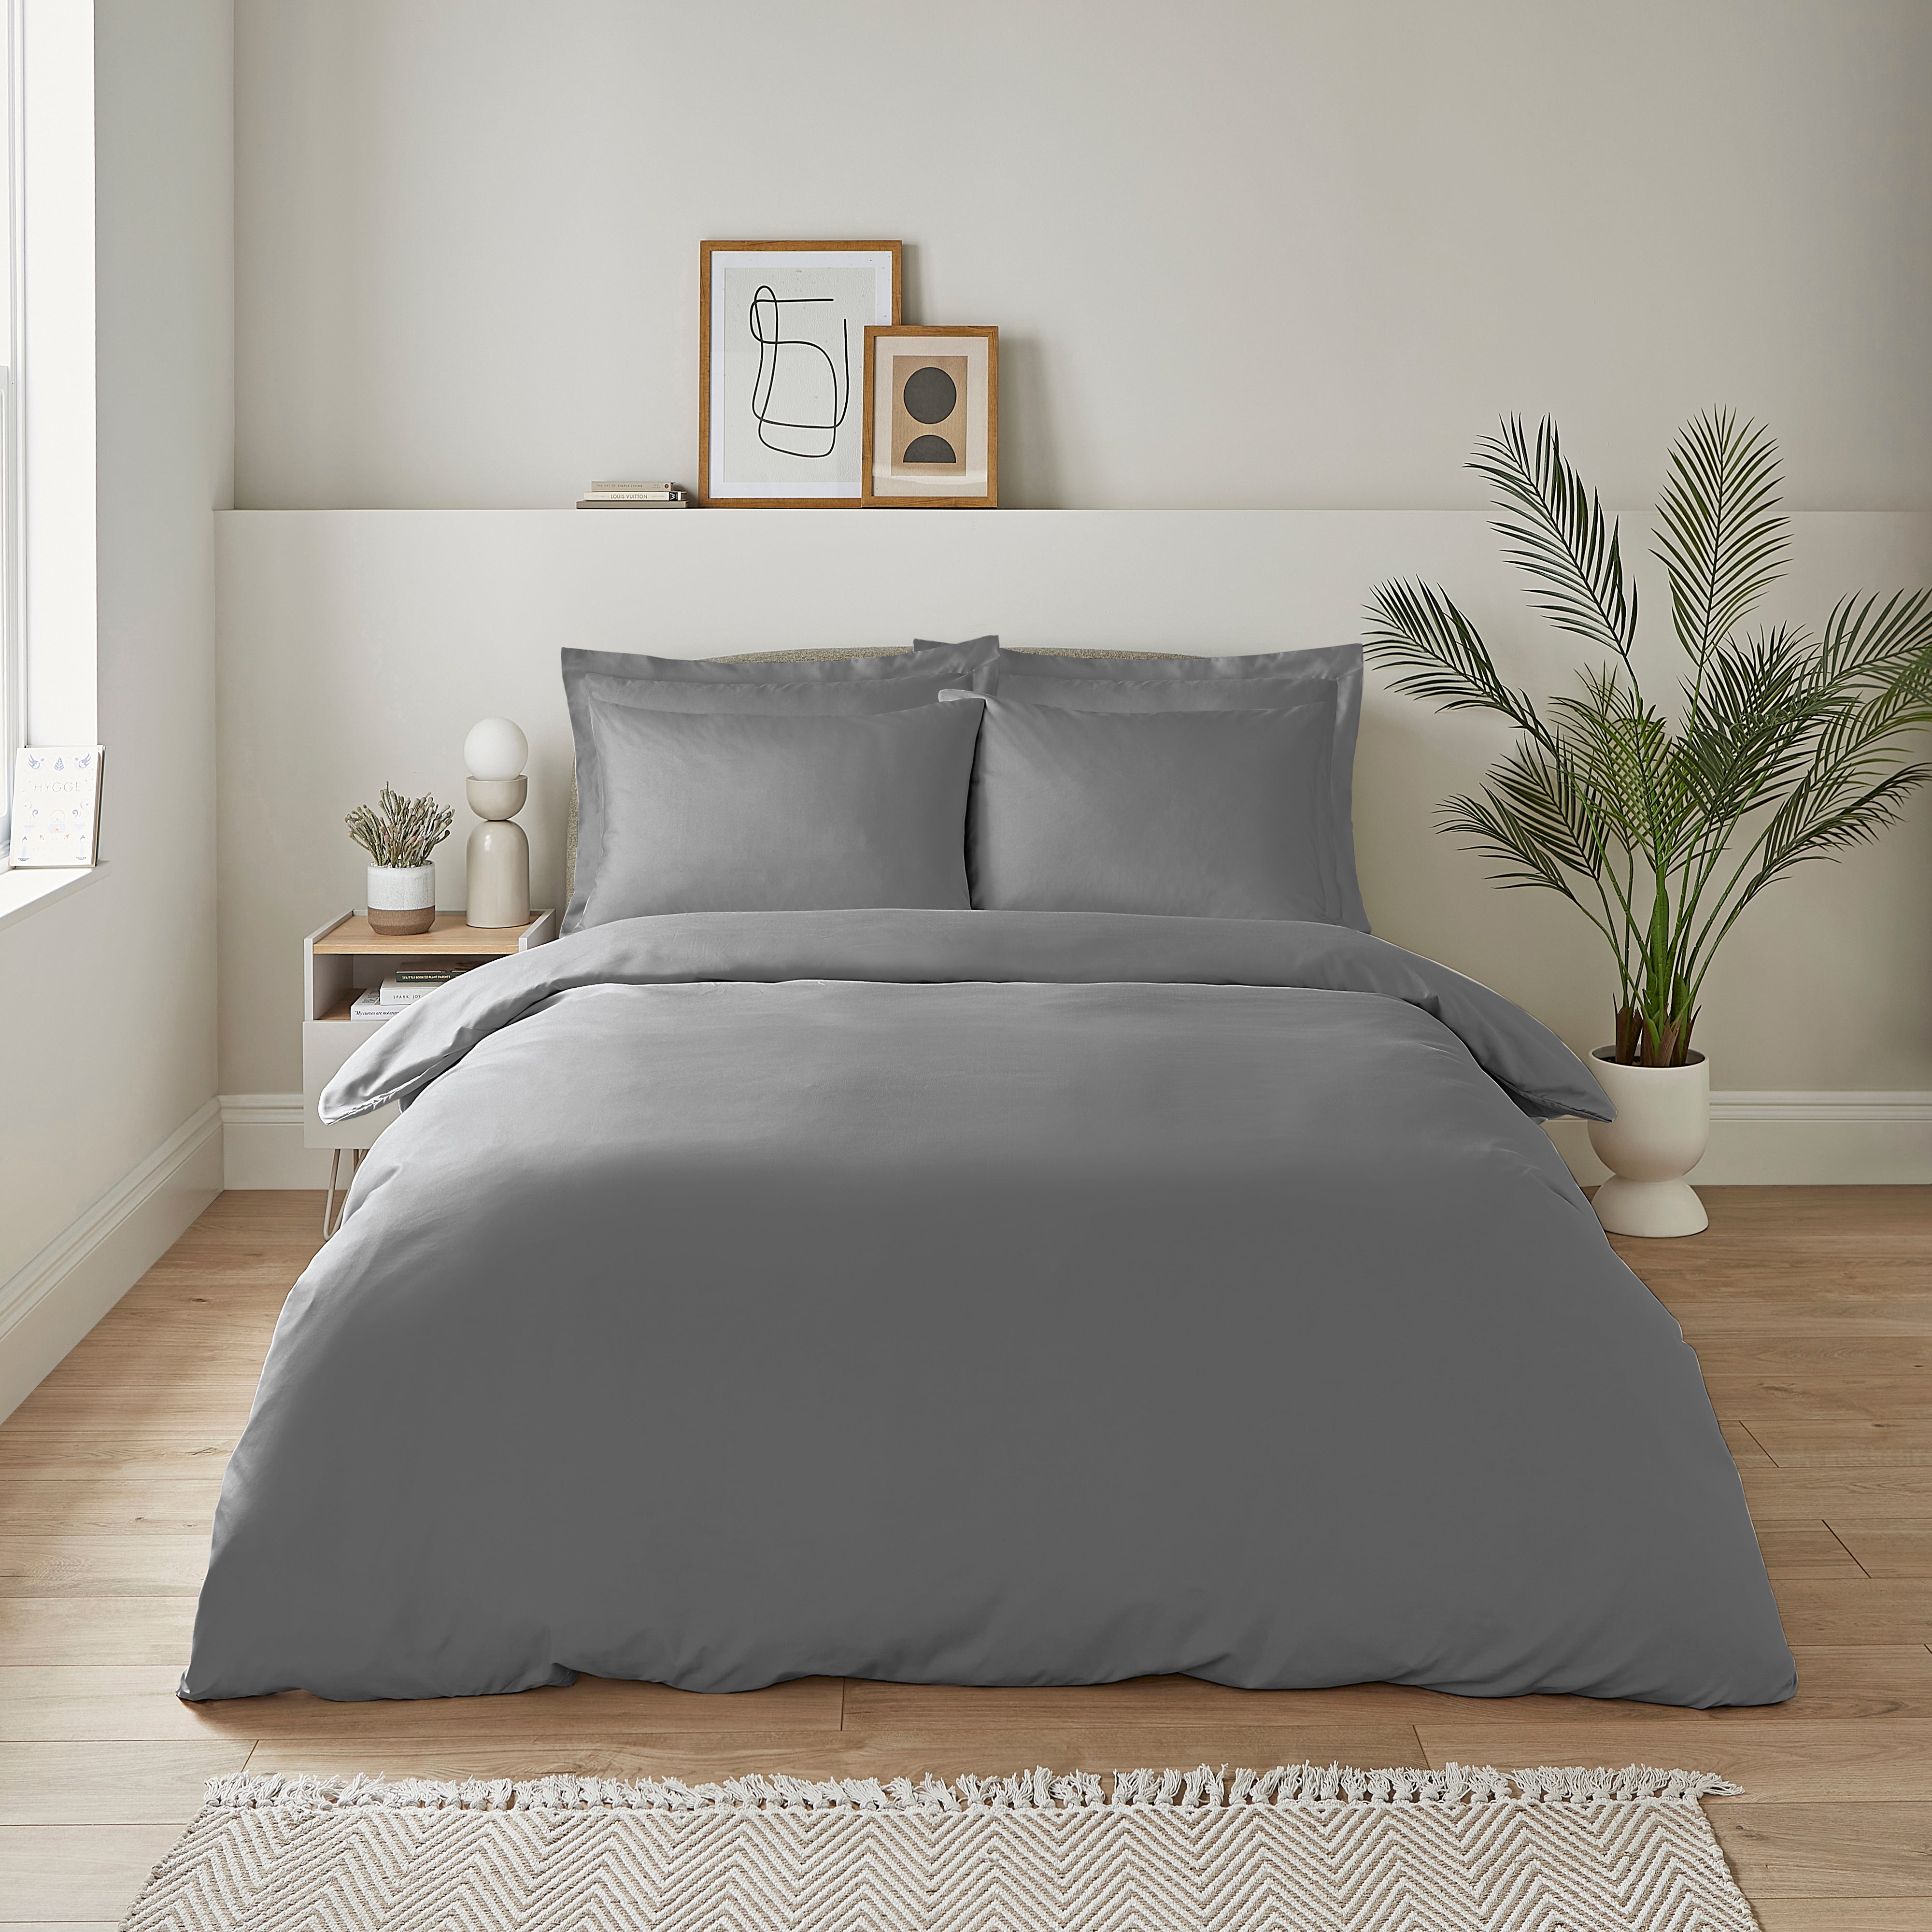 Super Soft Microfibre Plain Duvet Cover And Pillowcase Set Grey